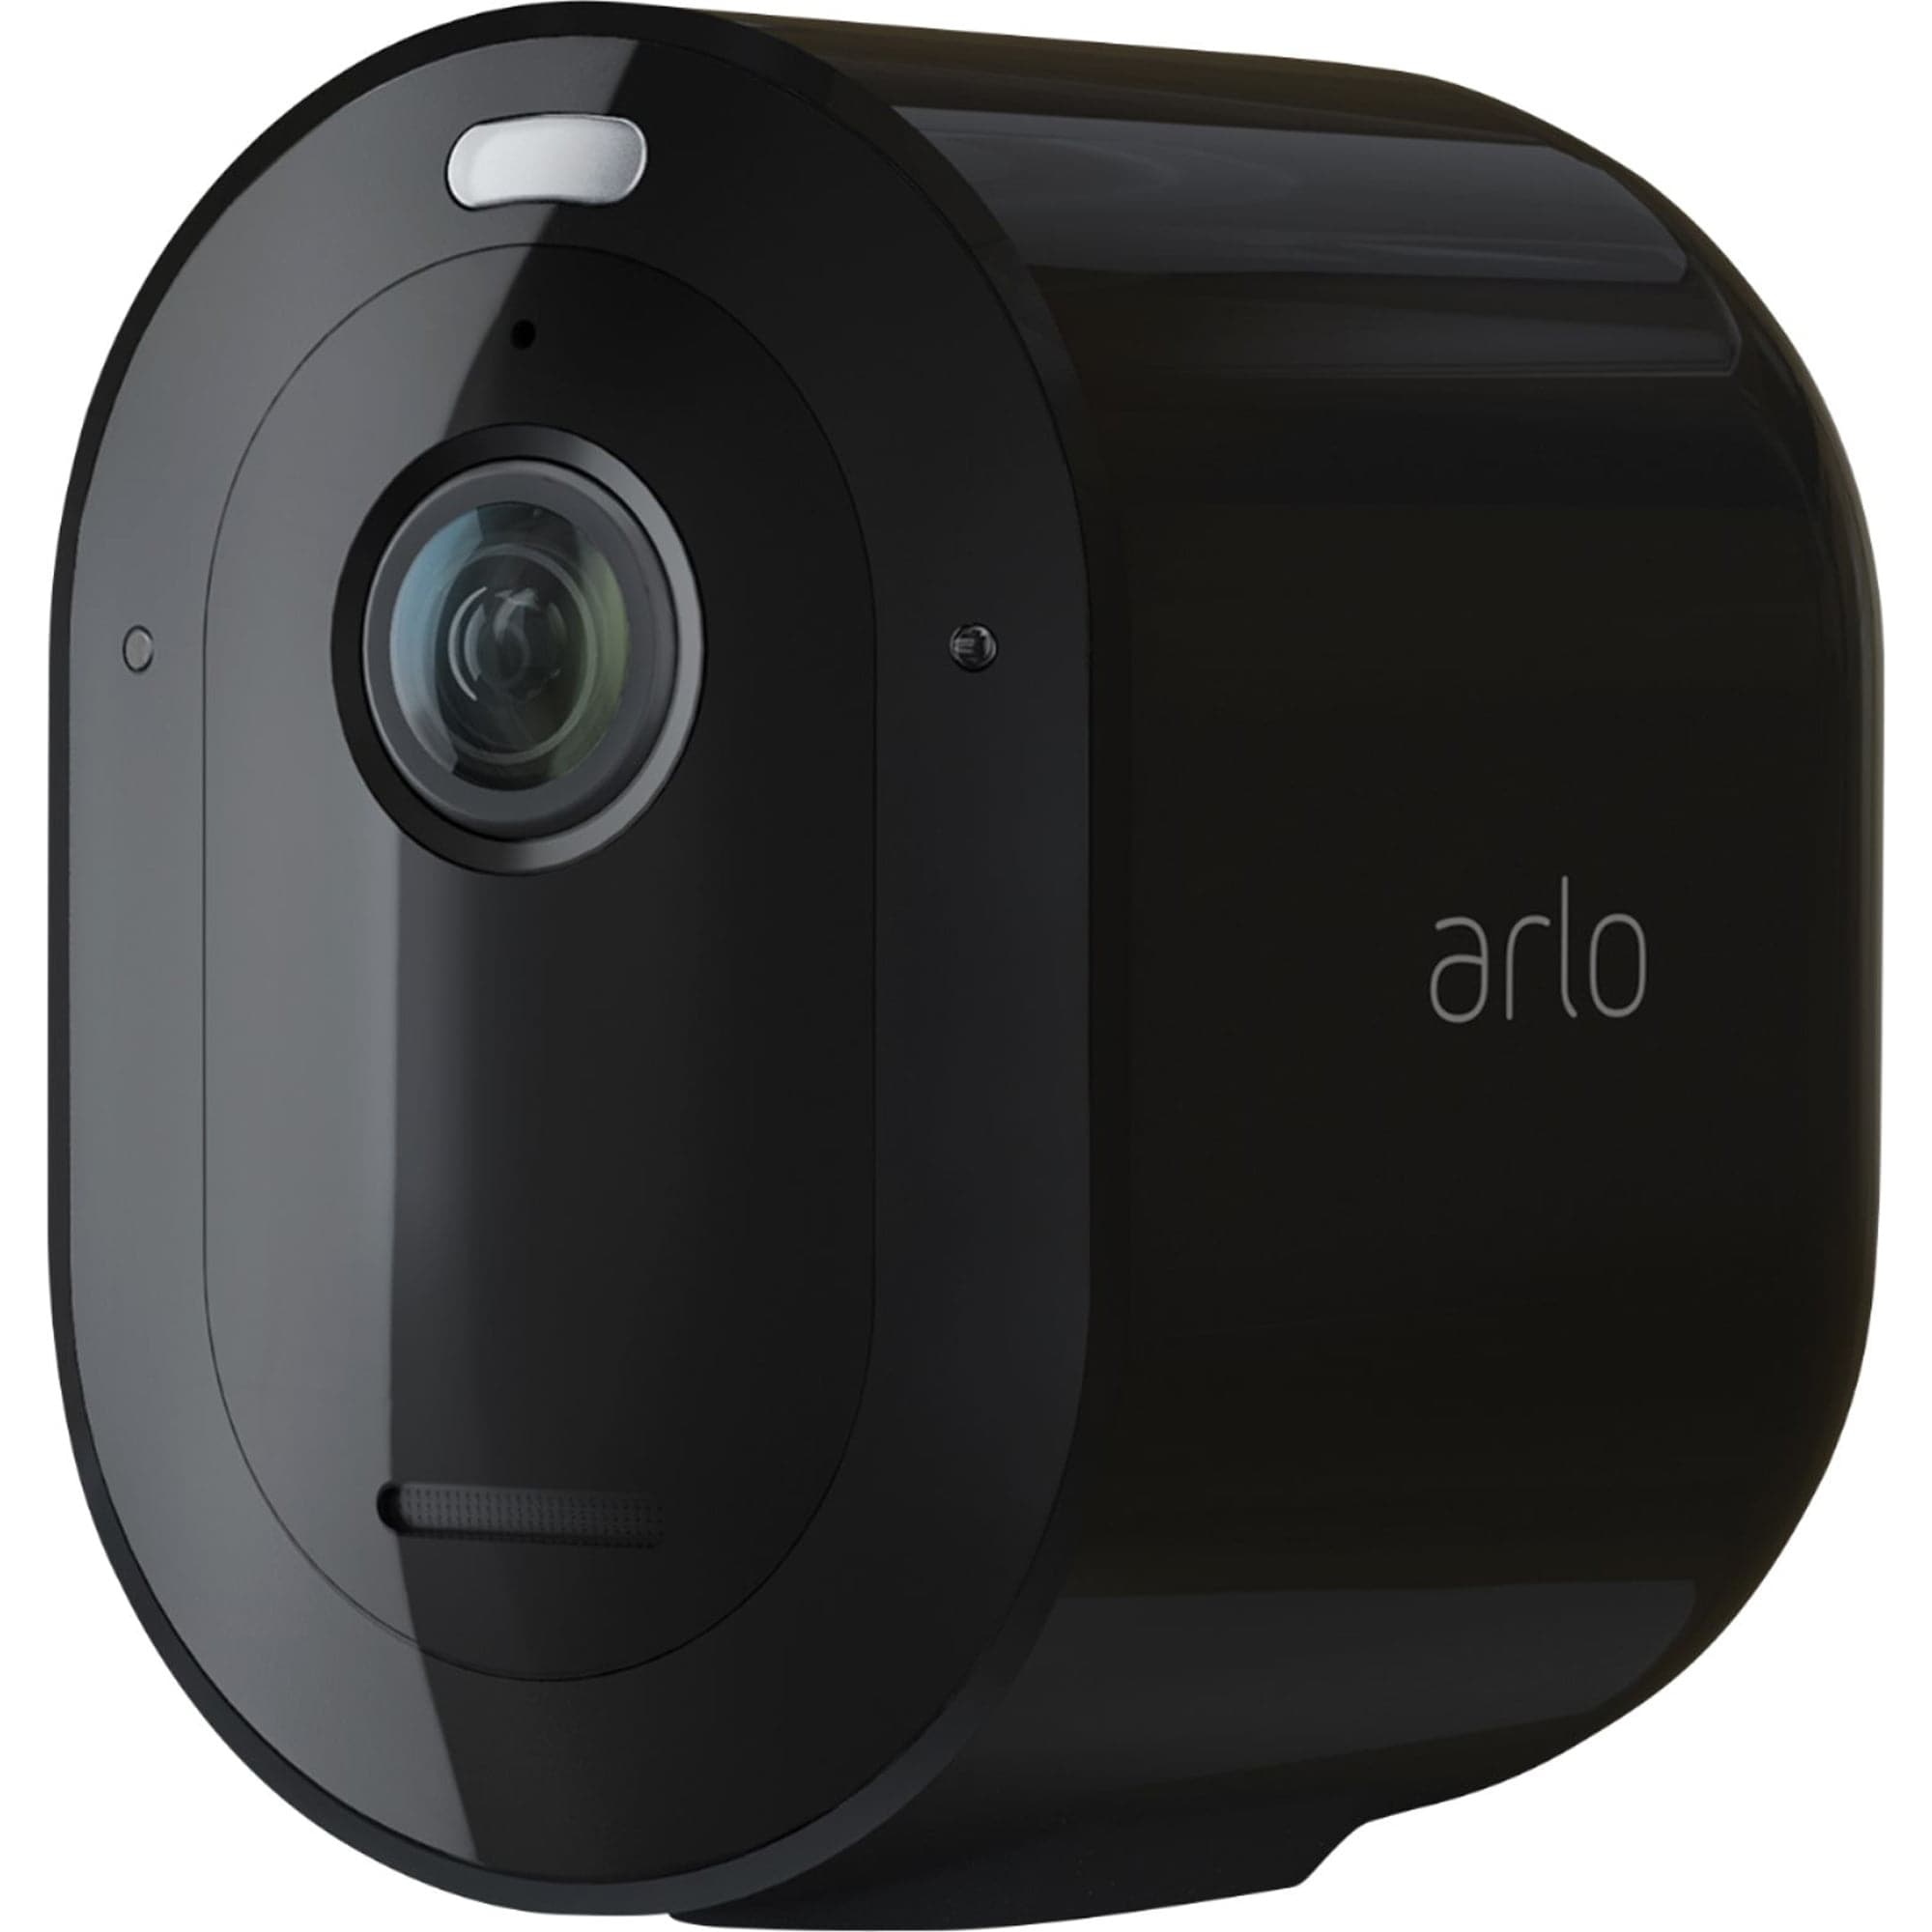 Pro 4 Series - Spotlight Camera - Wireless Security Camera, 2K Surveillance & HDR, Color Night Vision, 2 Way Audio